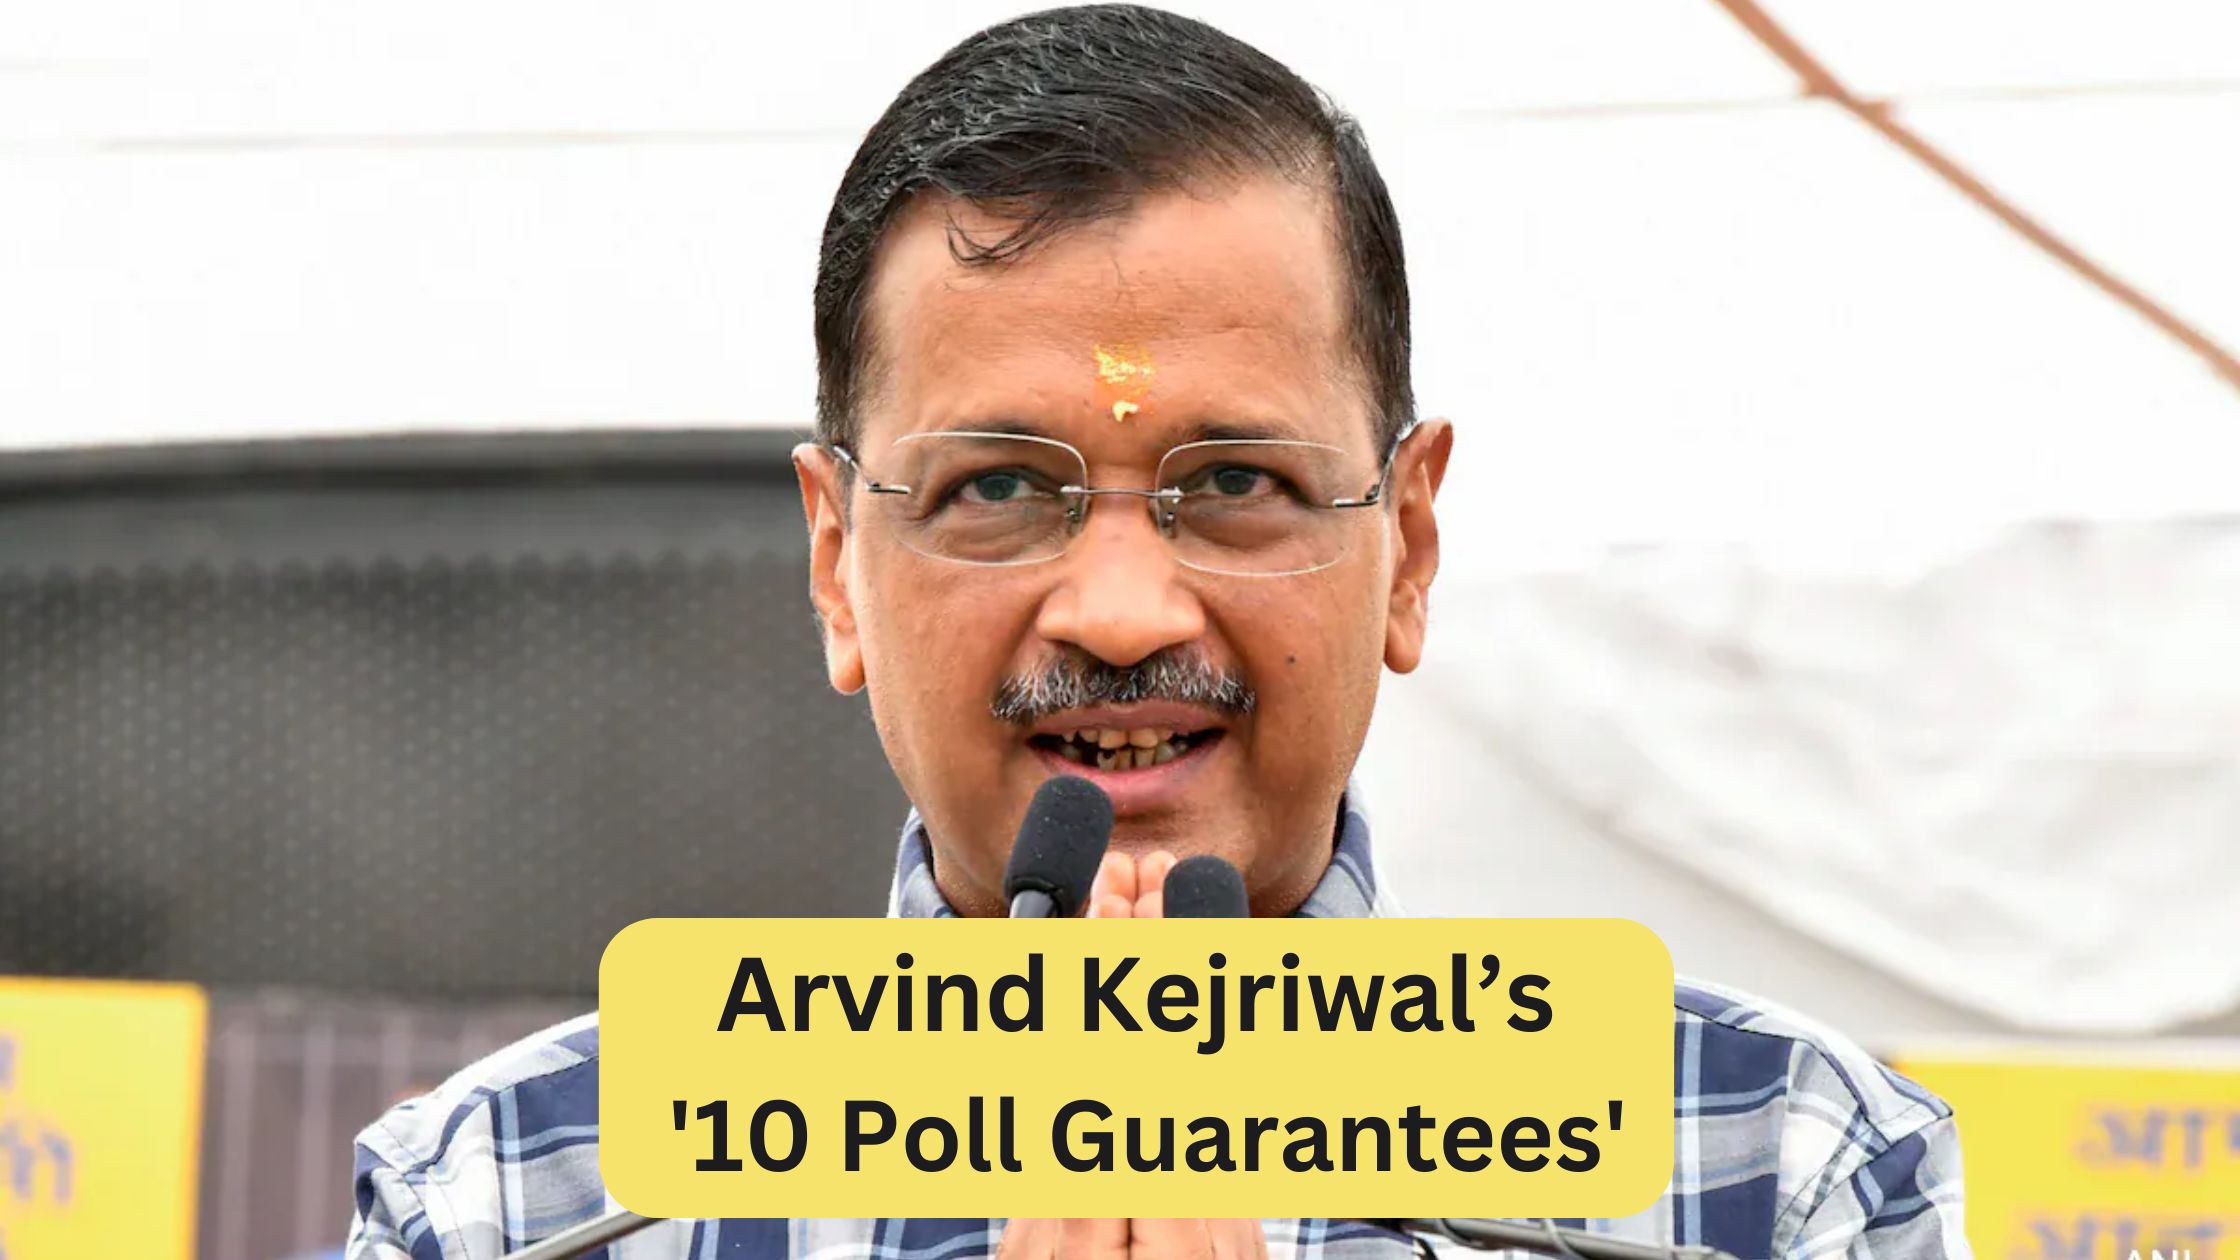 Poll Guarantees of Arvind Kejriwal